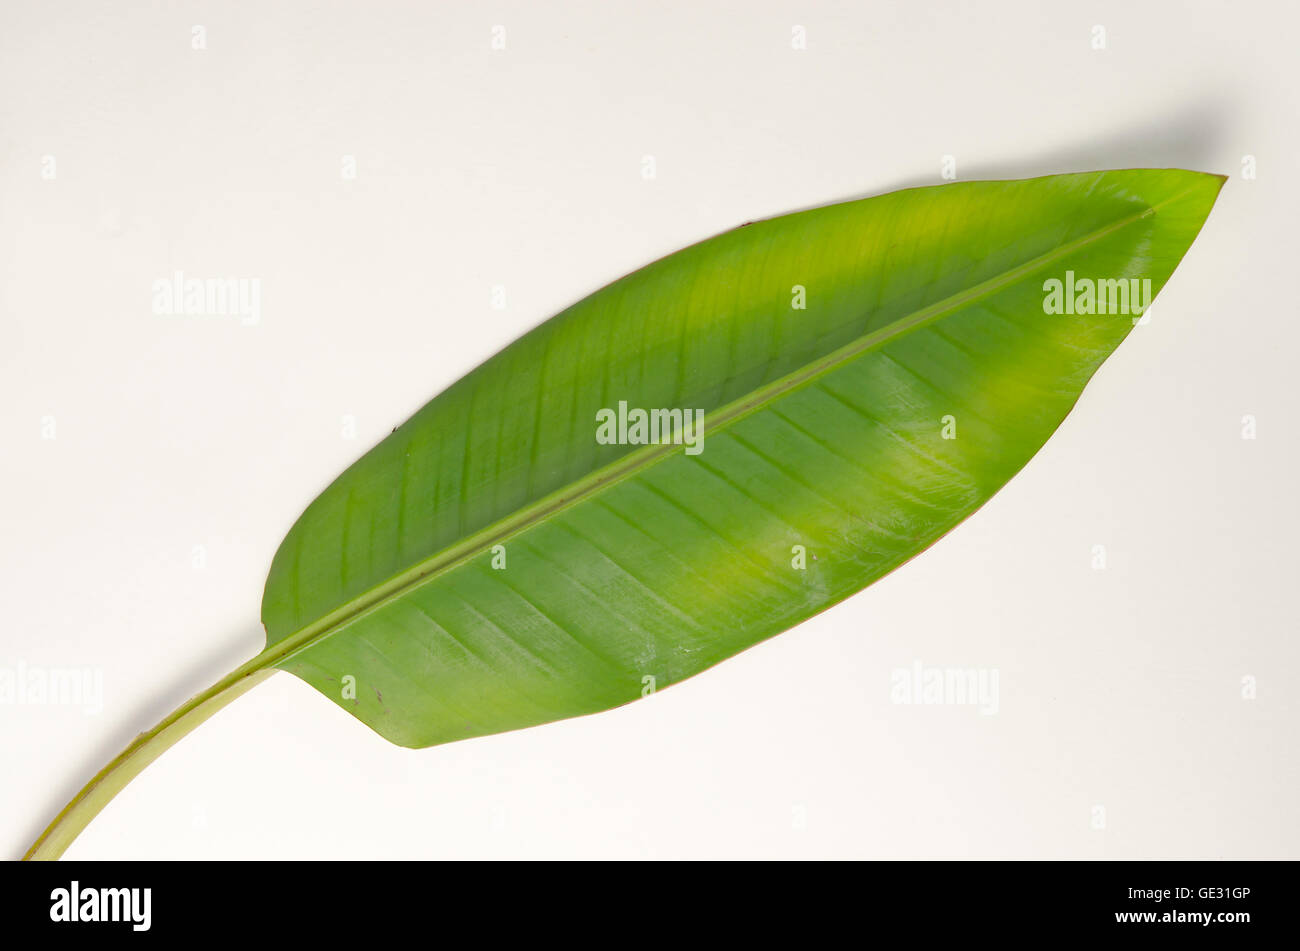 Banana (Other names are Musa banana acuminata, Musa banana balbisiana, and Musa x paradisiaca) leaf isolated on white background Stock Photo